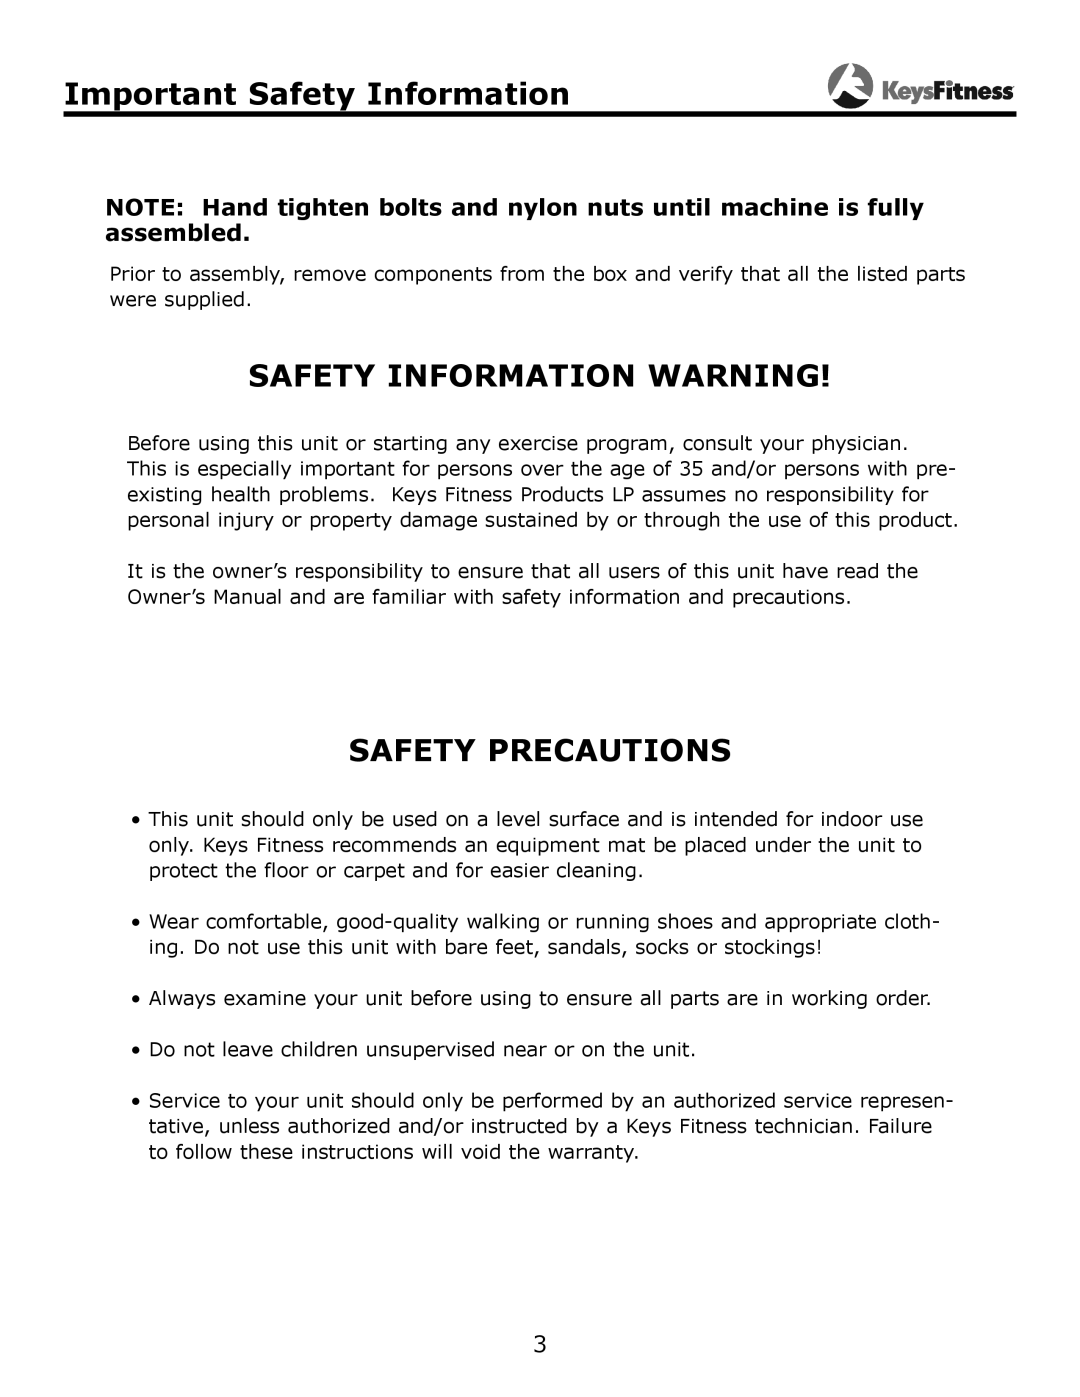 Keys Fitness KF-SS owner manual Important Safety Information, Safety Information Warning, Safety Precautions 